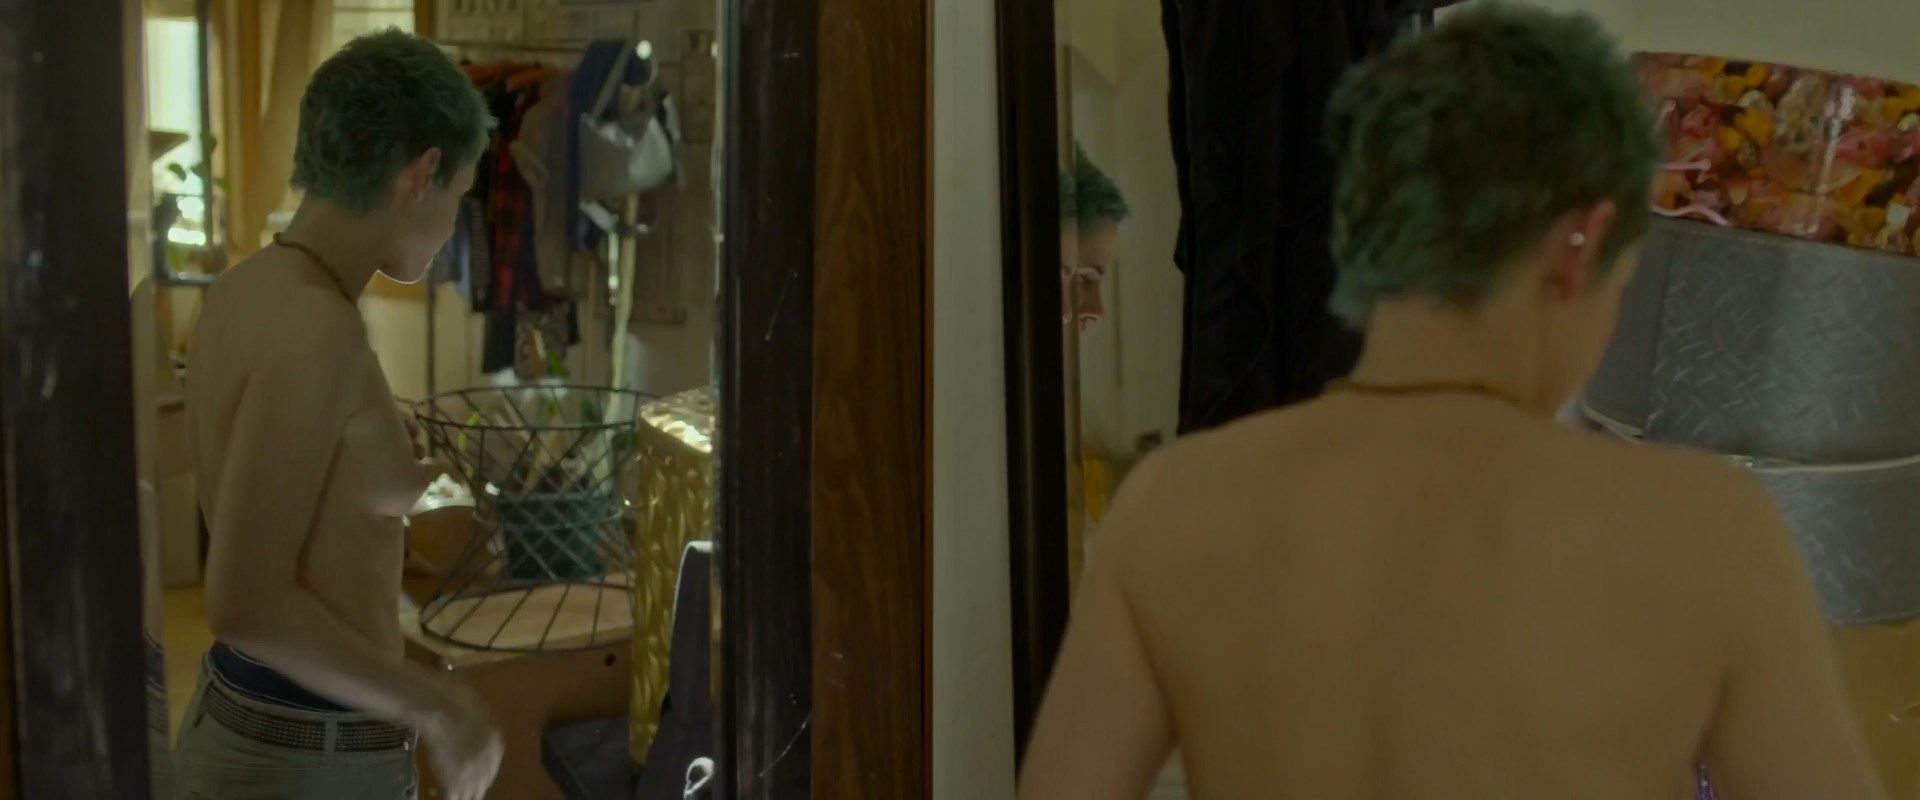 Kristen Stewart nude - Jeremiah Terminator LeRoy (2018)